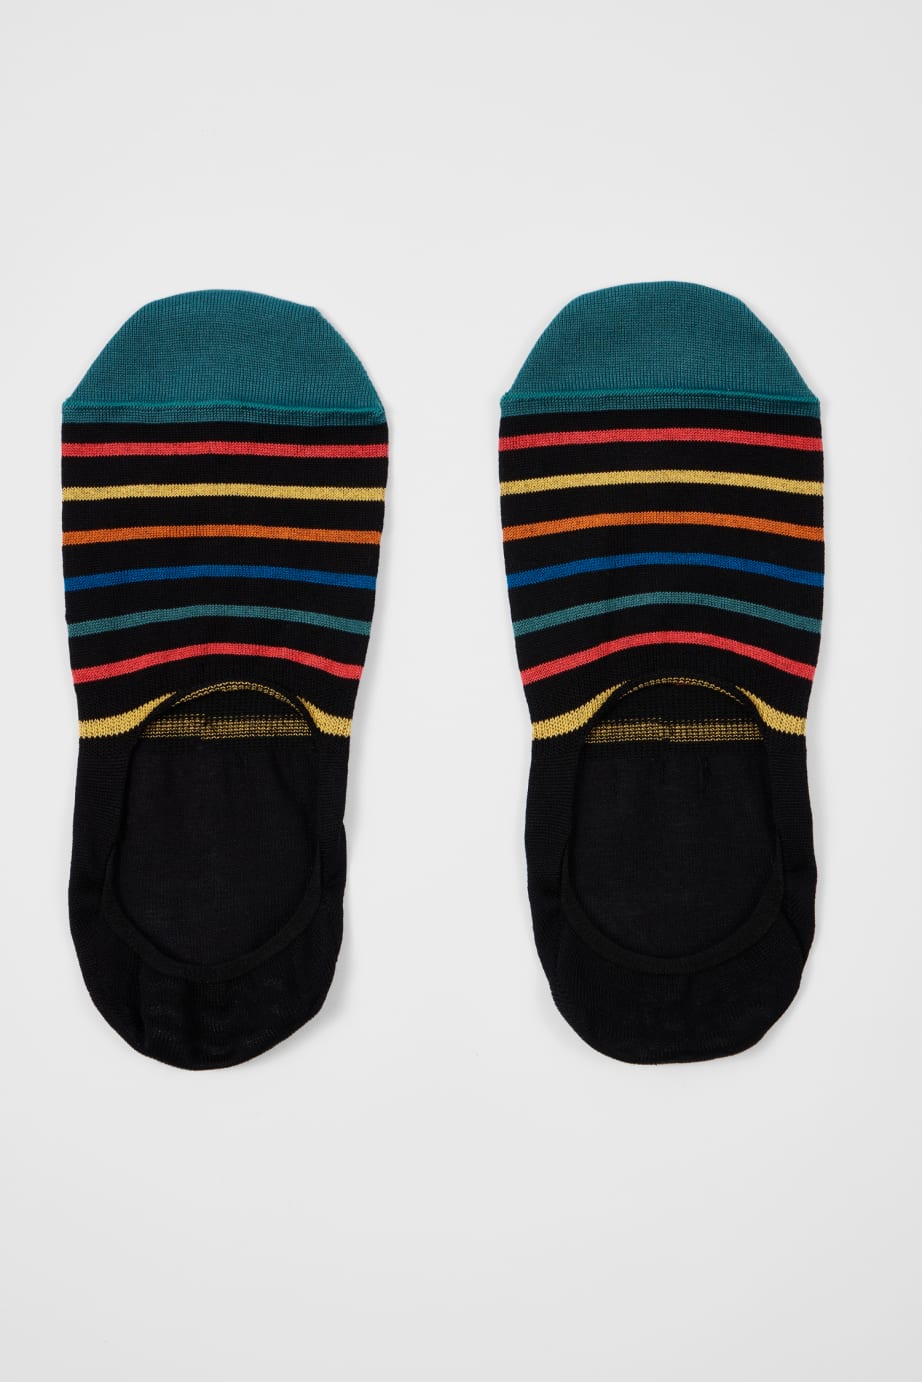 Pair View - Black Stripe Loafer Socks Paul Smith